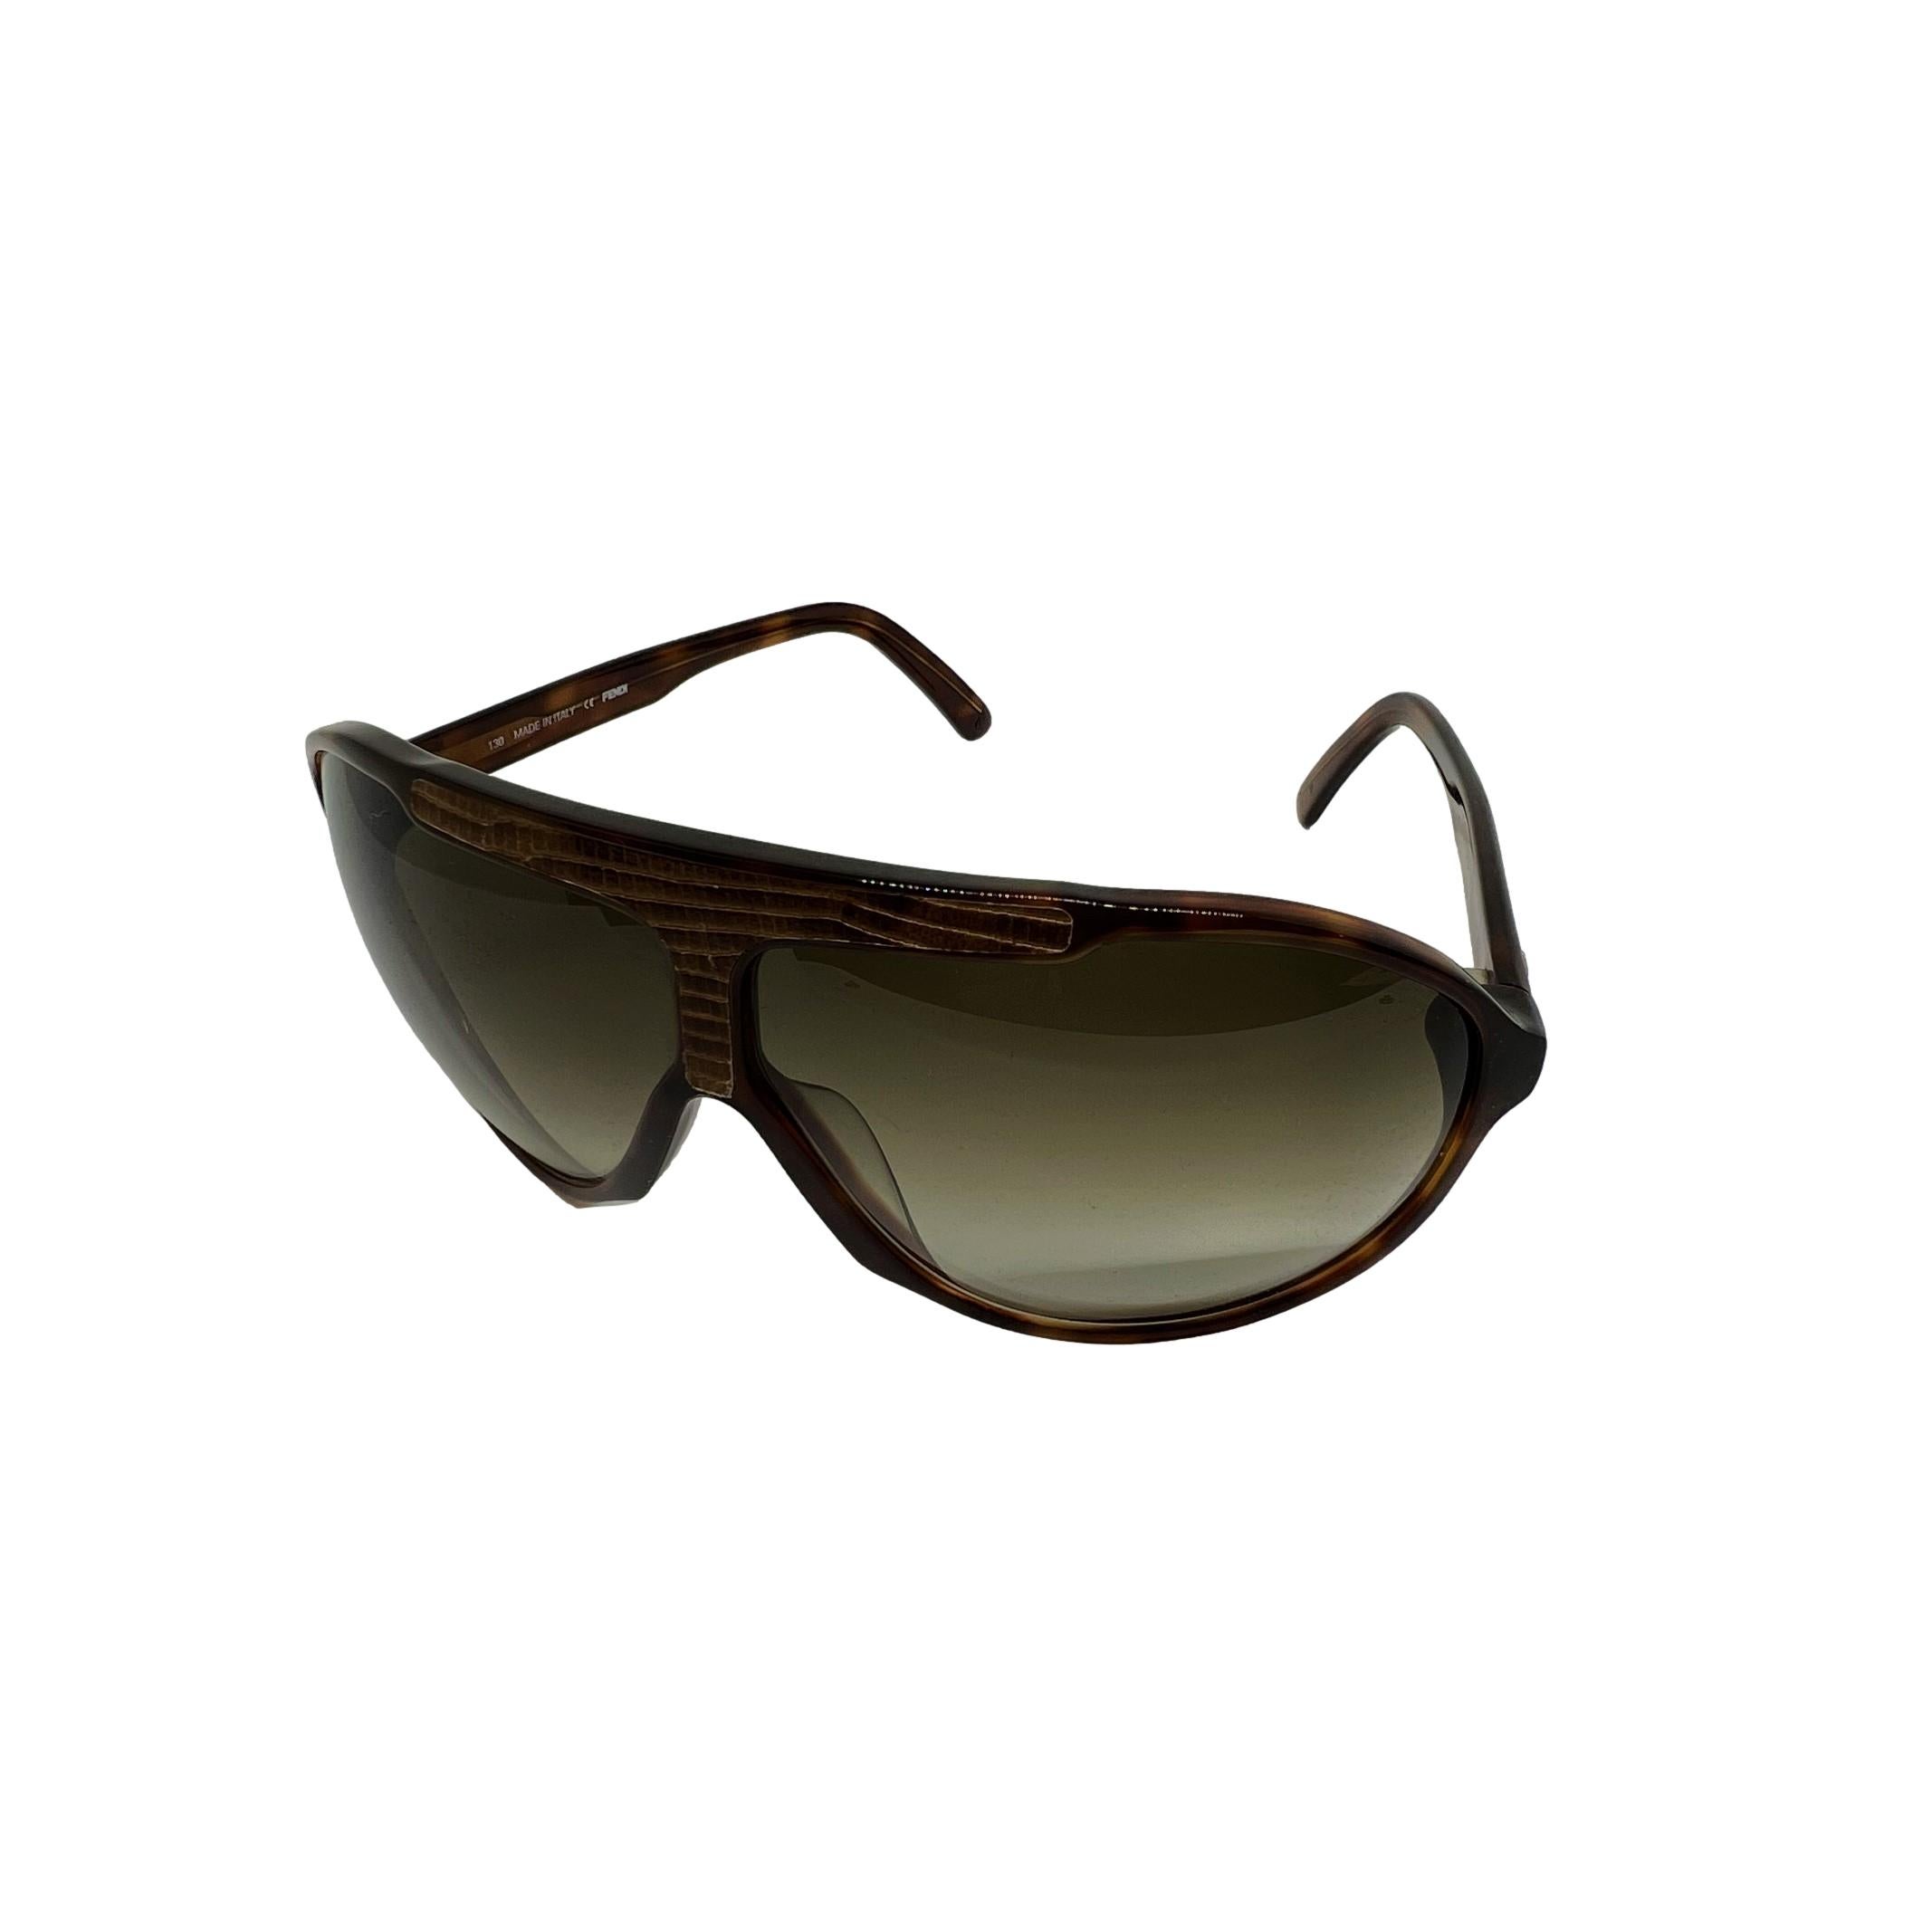 New Fendi Unisex Sunglasses with Case 2